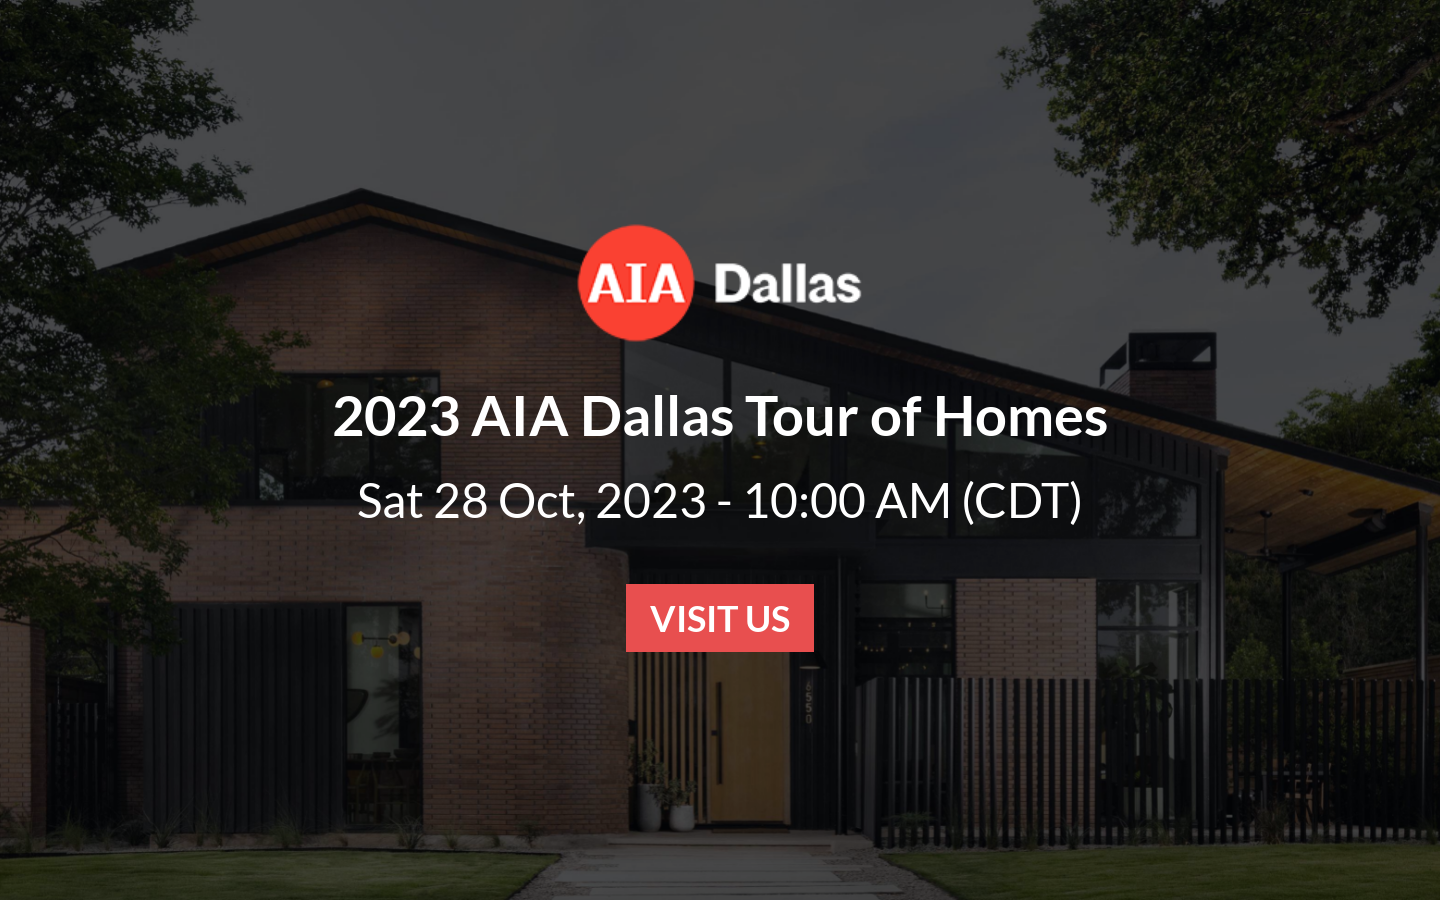 aia dallas tour of homes 2023